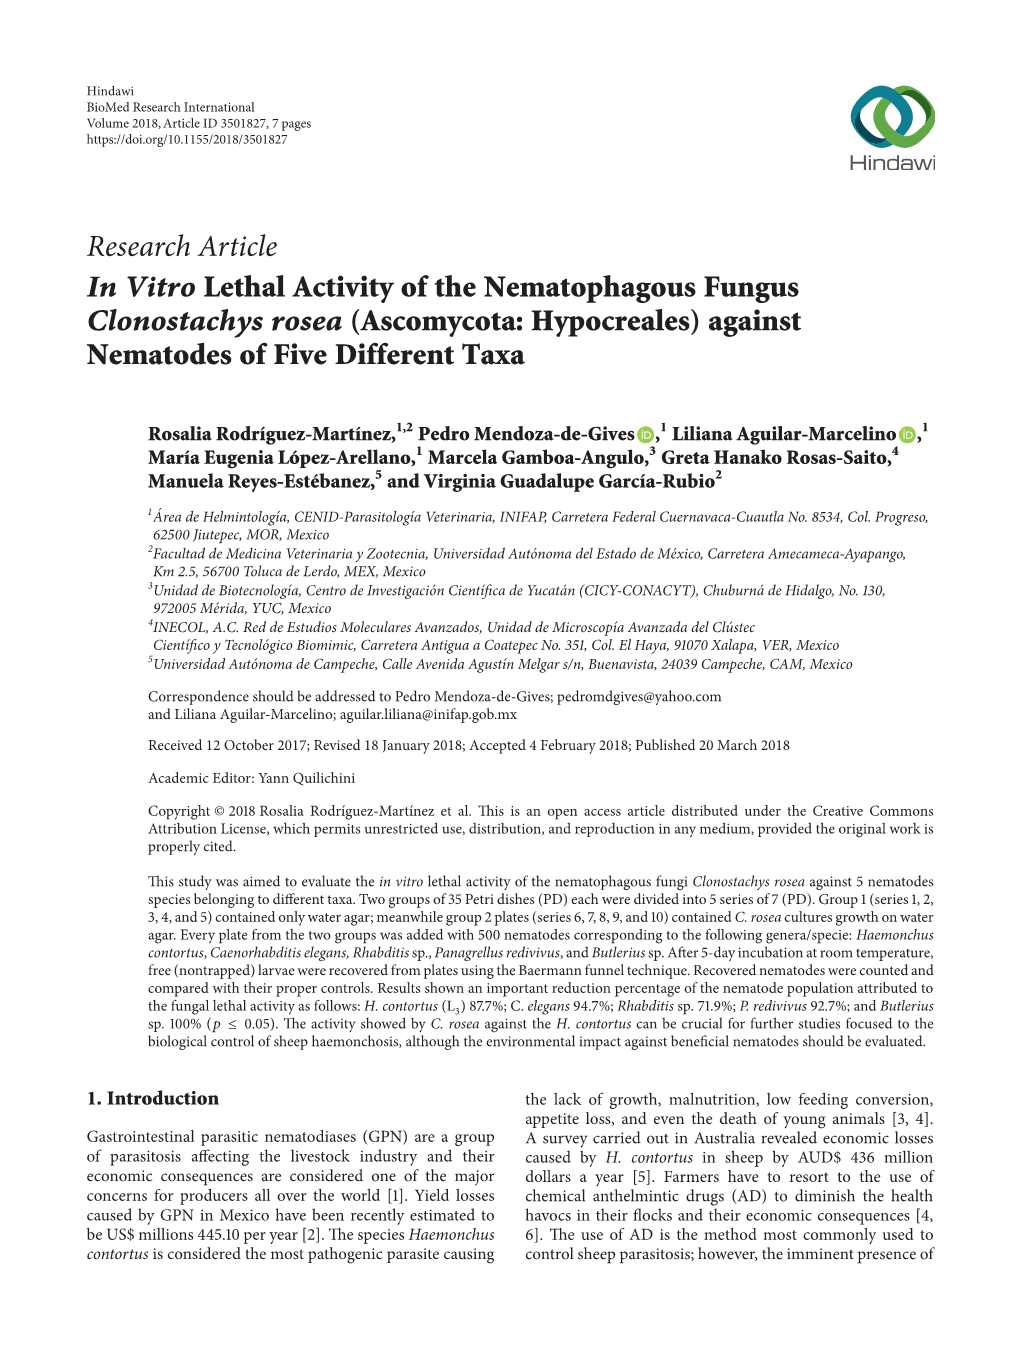 In Vitro Lethal Activity of the Nematophagous Fungus Clonostachys Rosea (Ascomycota: Hypocreales) Against Nematodes of Five Different Taxa